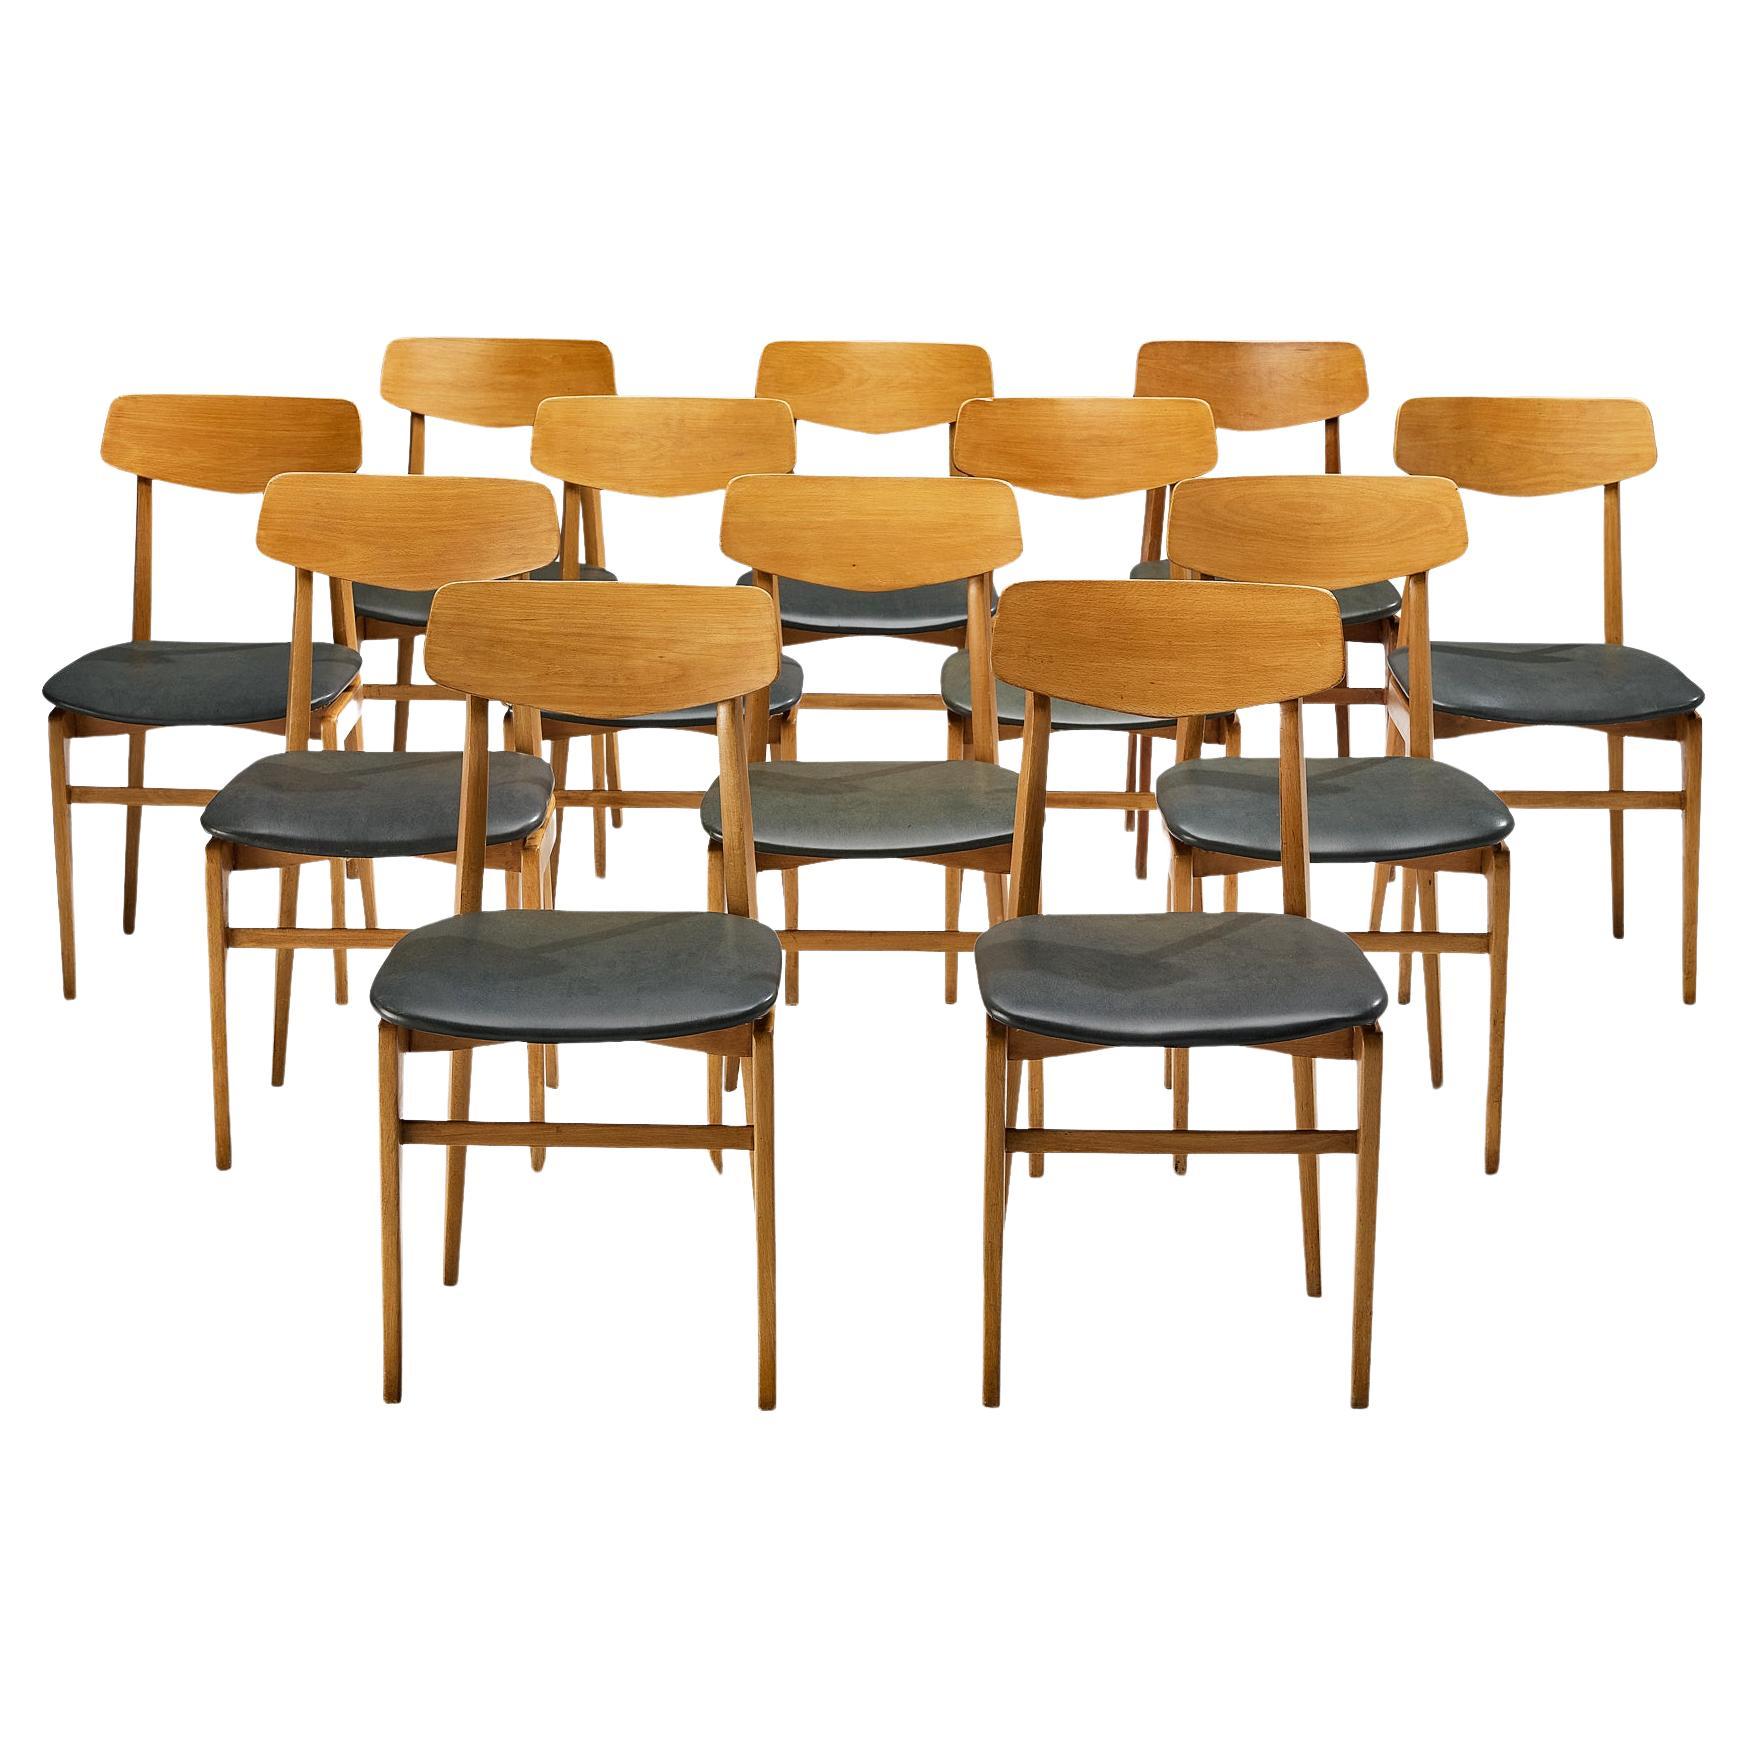 Danish Set of Twelve Danish Sculptural Chairs 